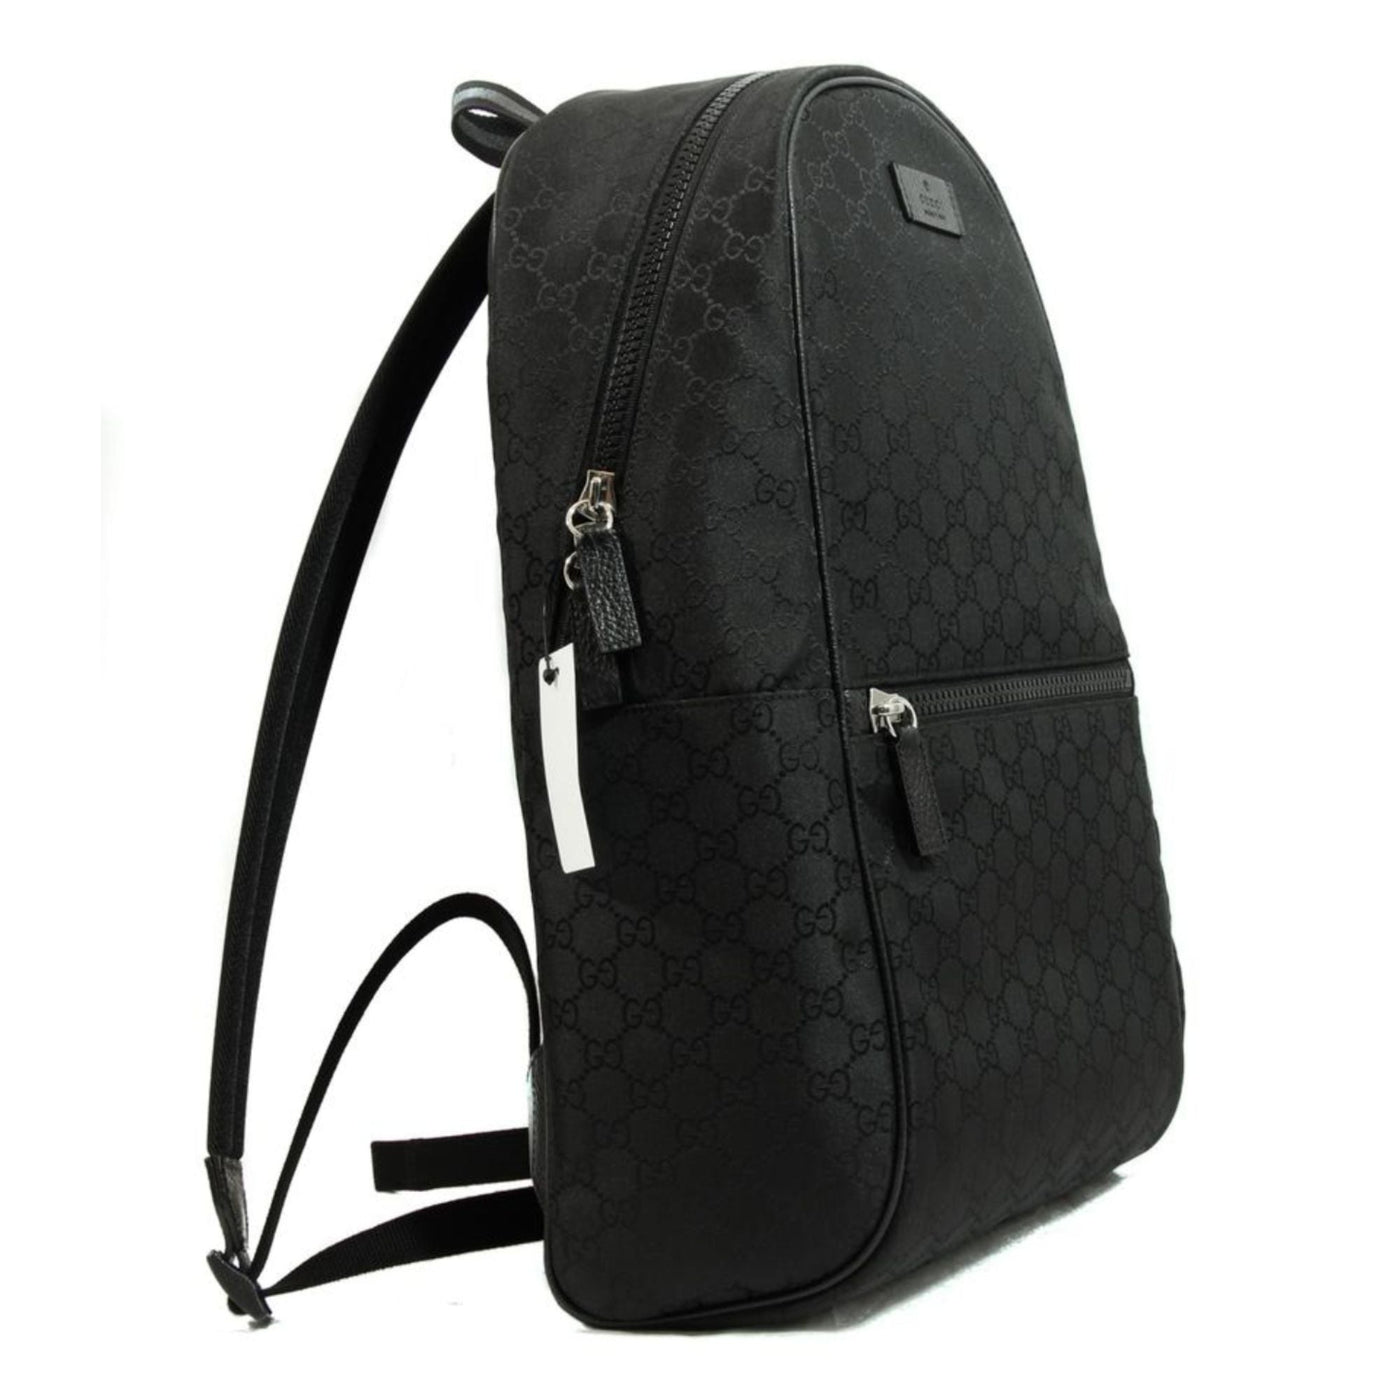 Gucci Nylon GG Guccissima Black Slim Backpack Travel Bag - LUXURYMRKT